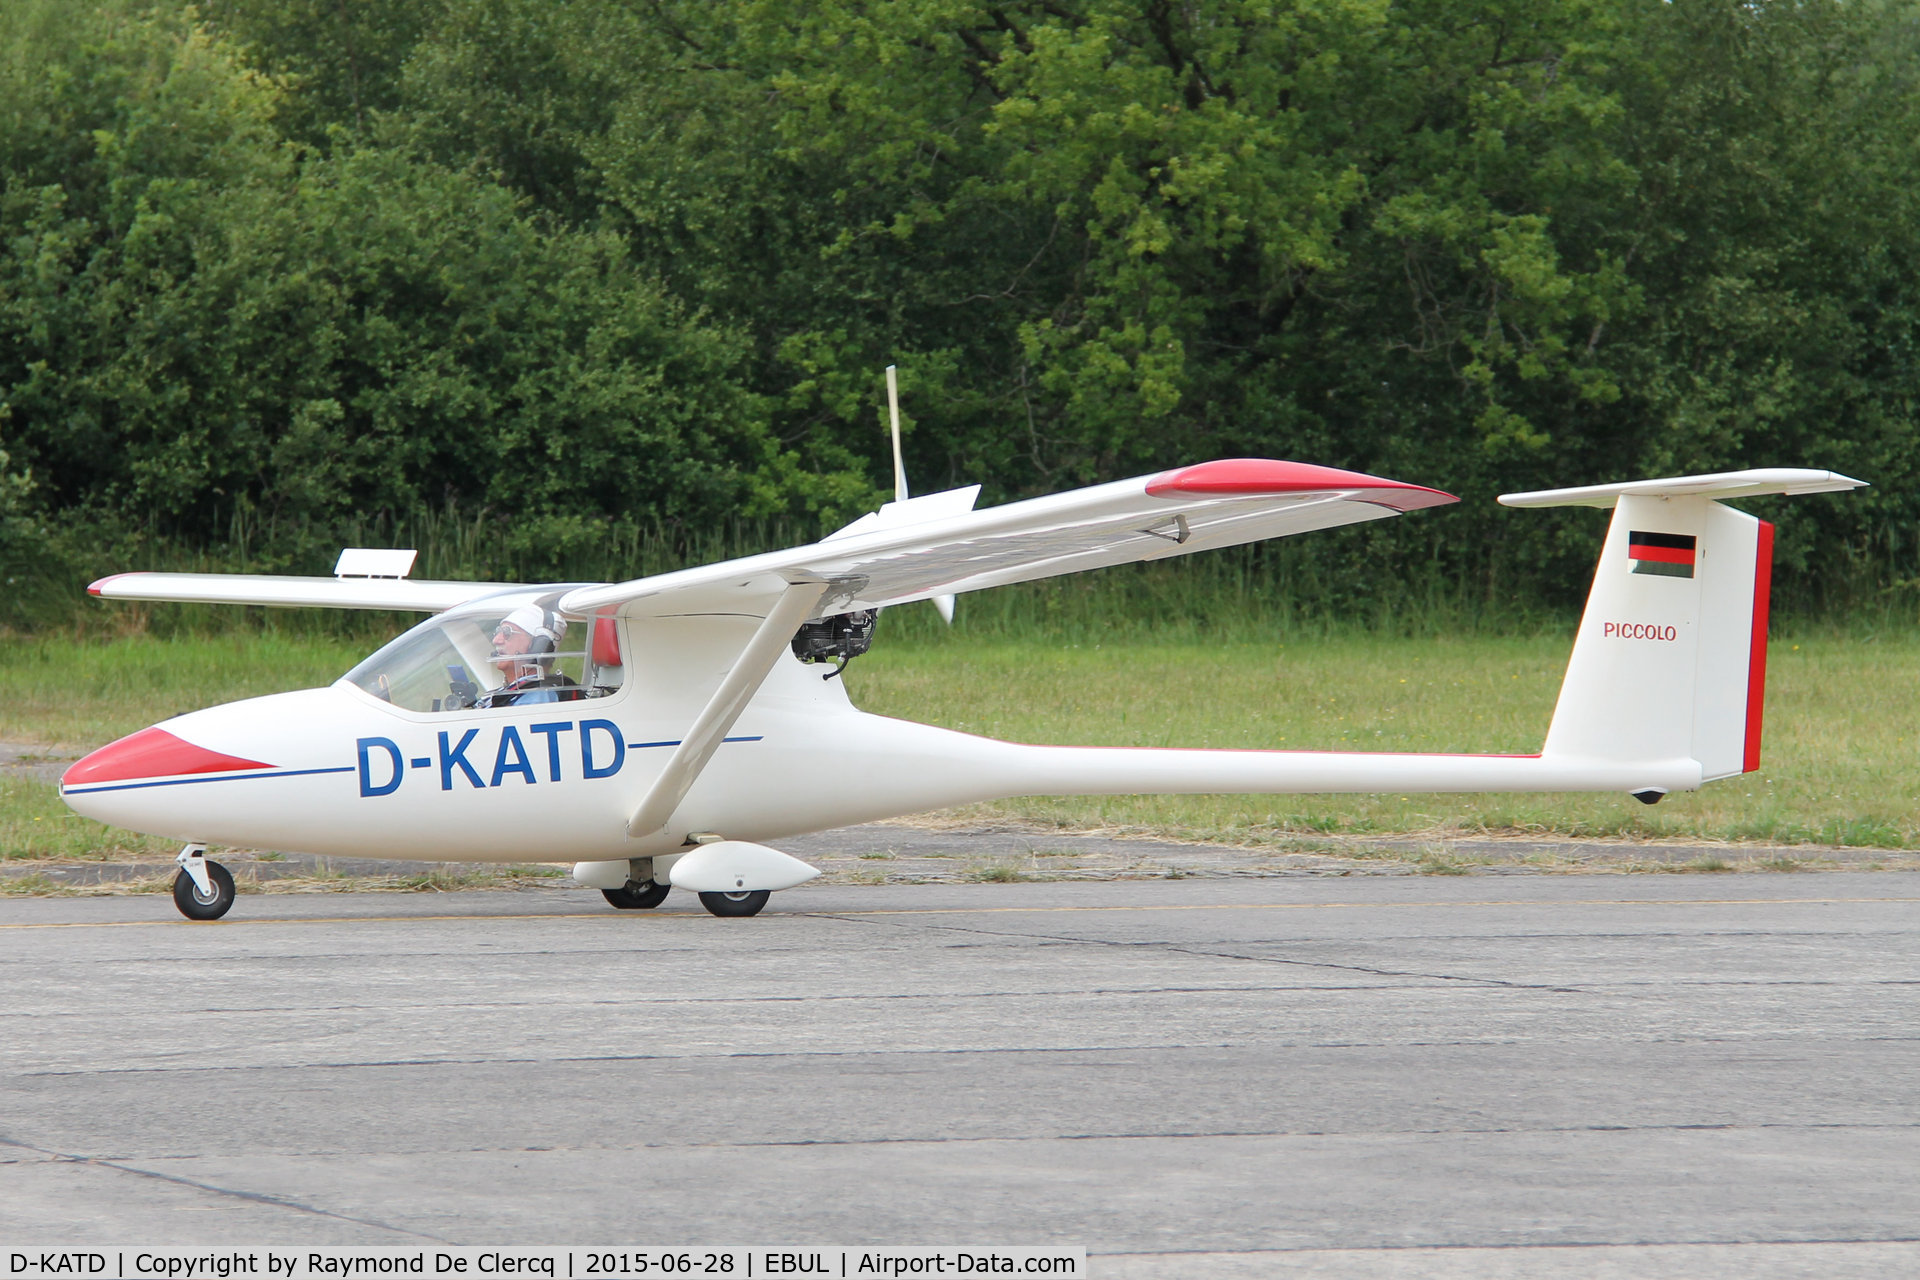 D-KATD, Technoflug Piccolo C/N 009, Ursel Avia 2015.